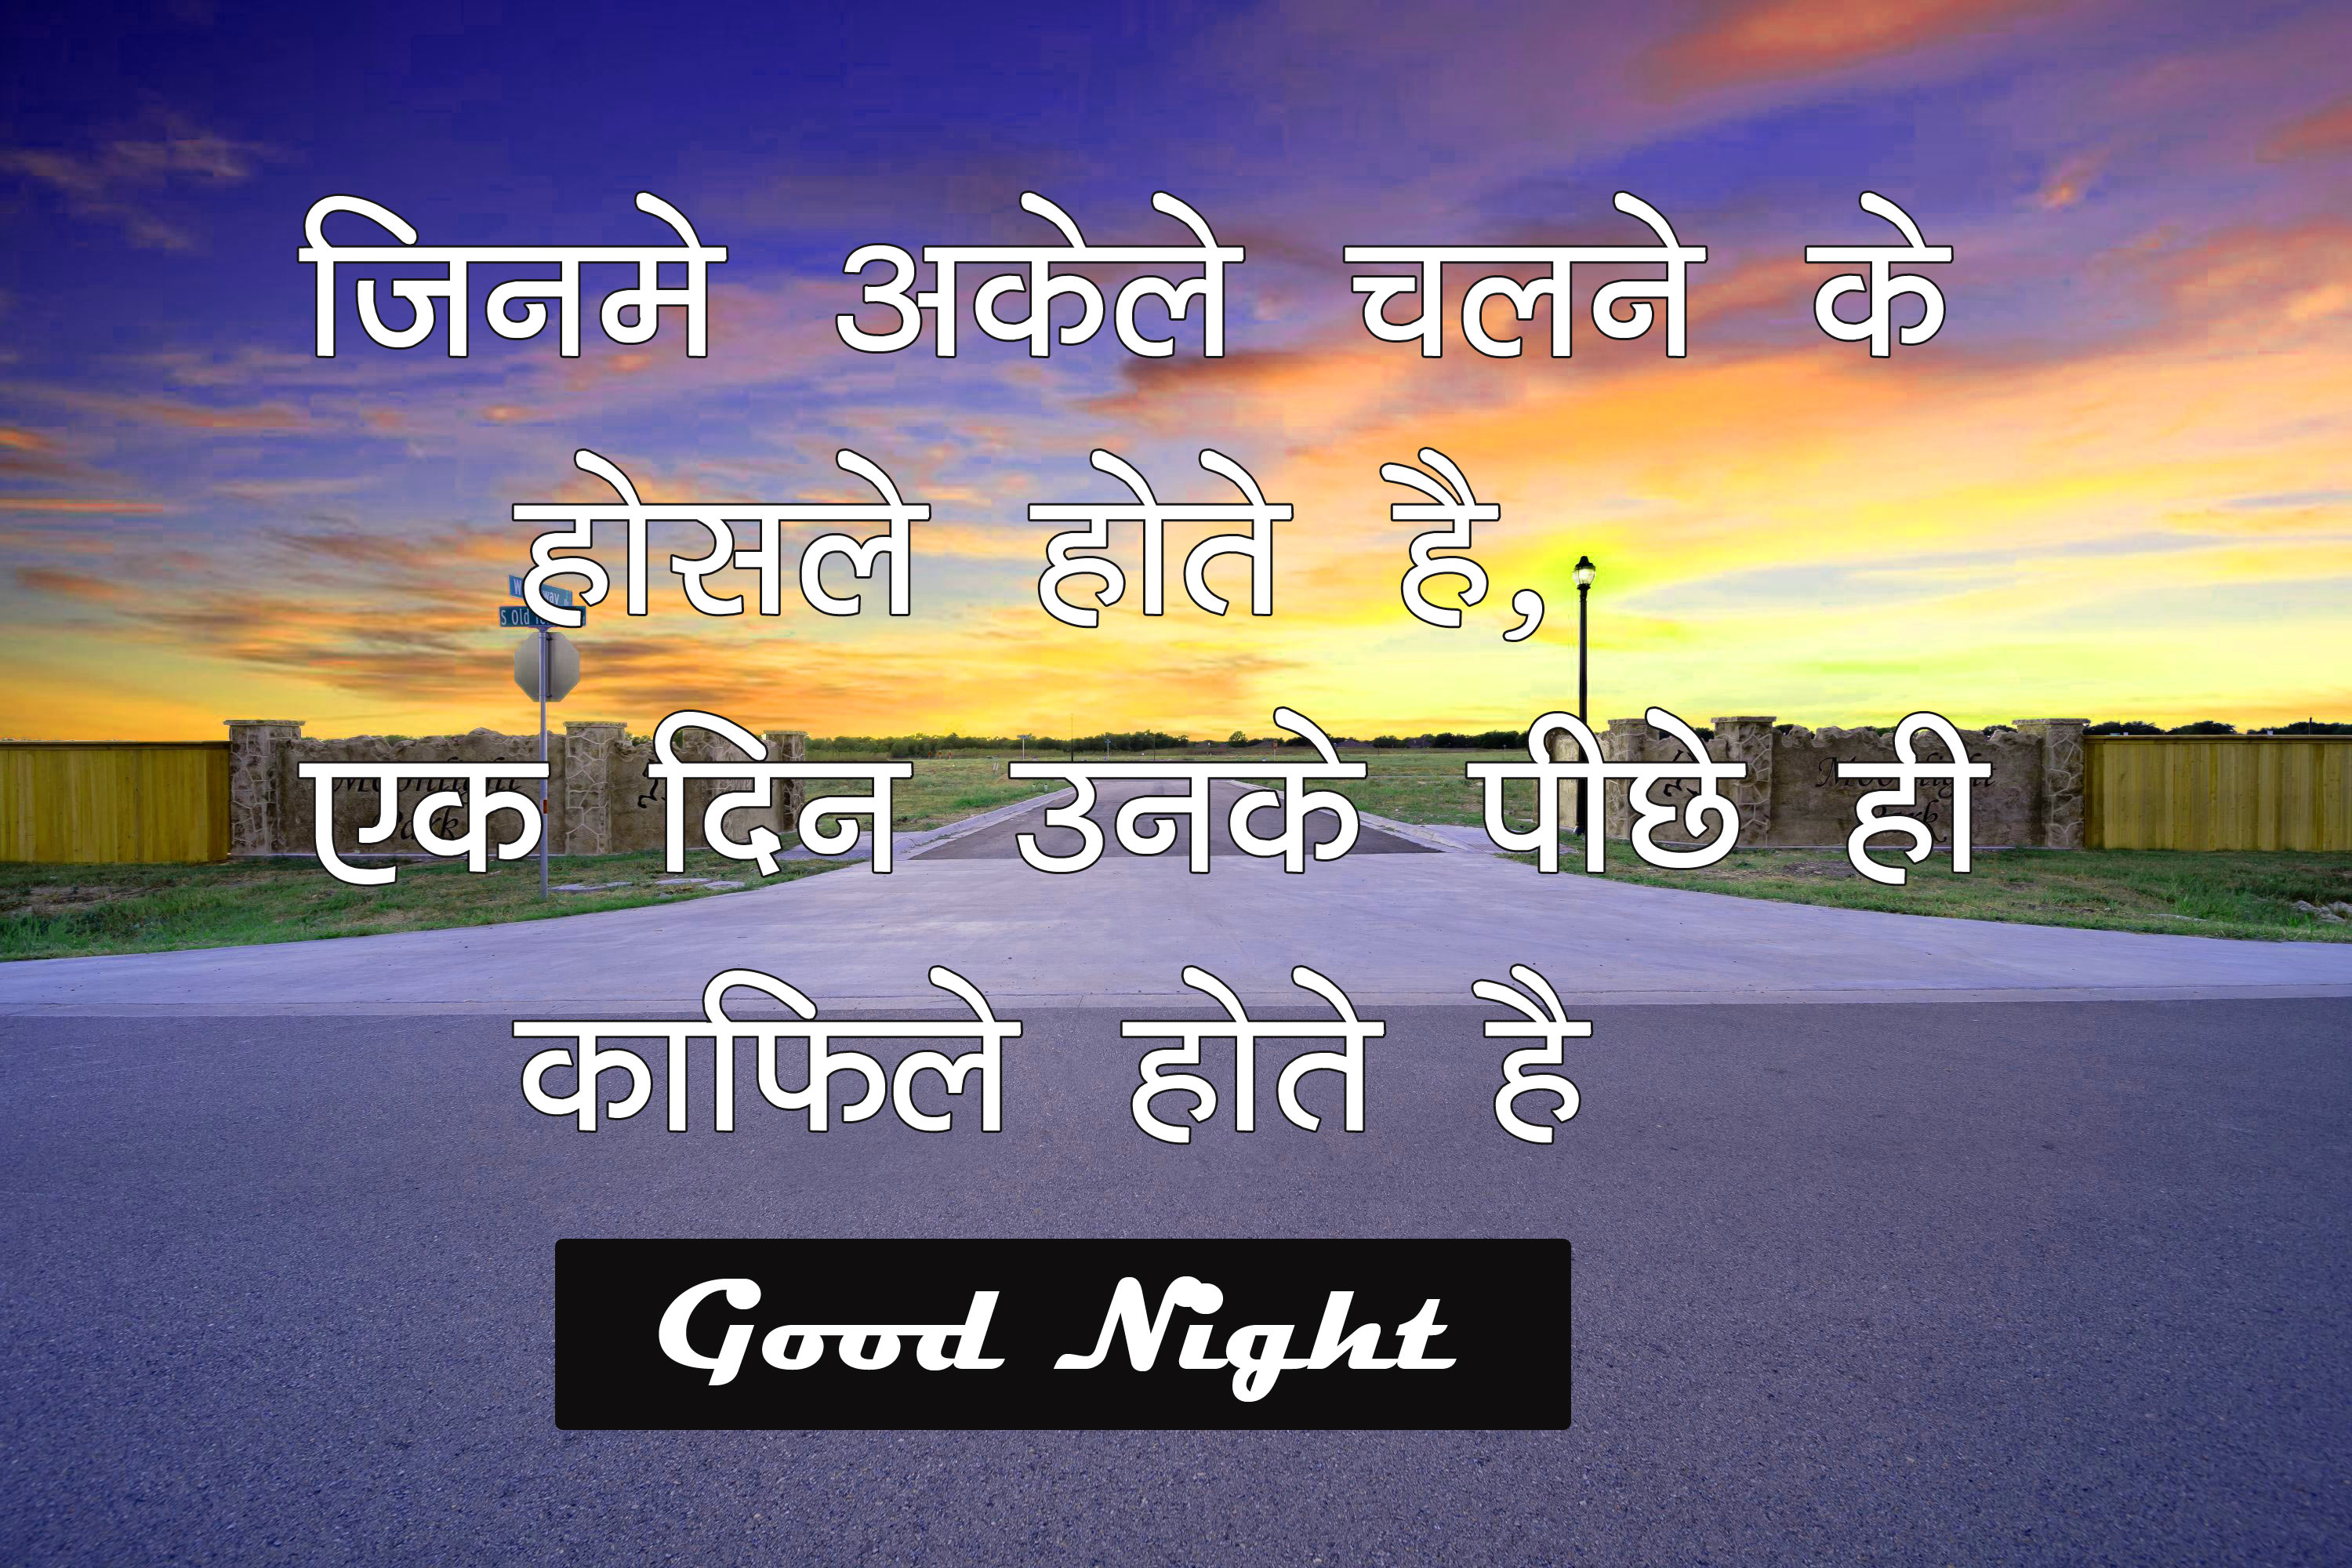 Hindi Motivational Quotes Good Night  Images Pics Download 